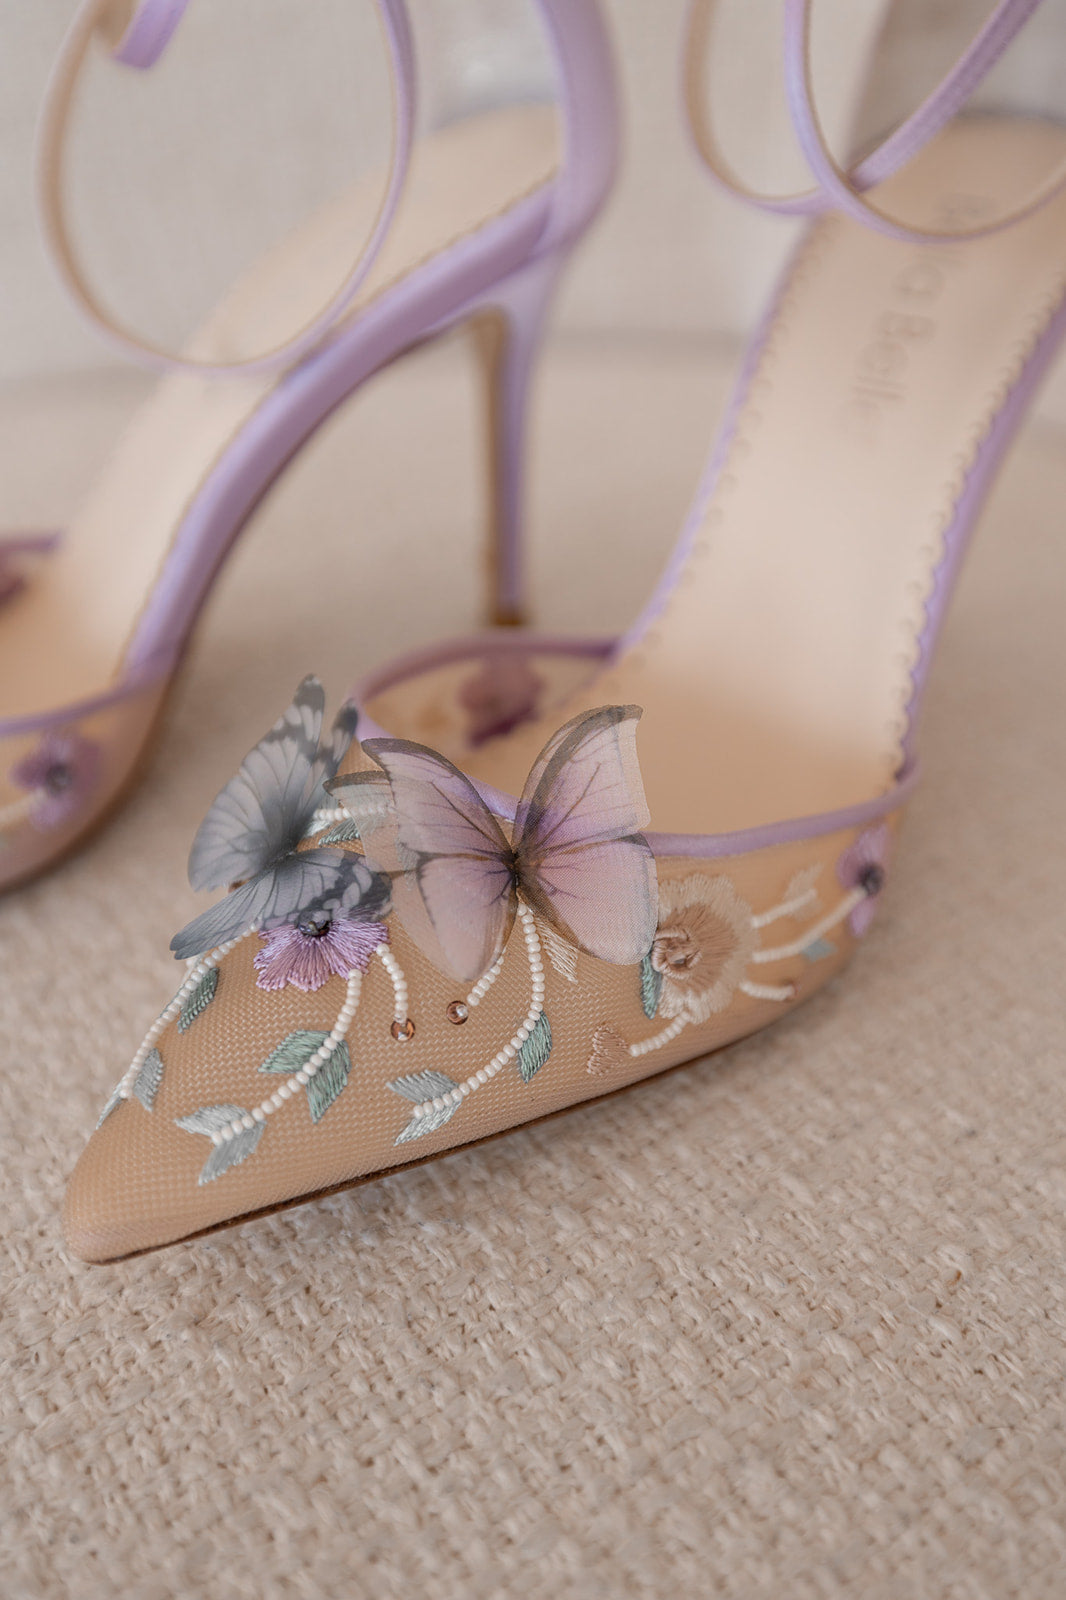 Irina Lace Up Heel (Purple) | Prom heels, Heels, Dark purple heels